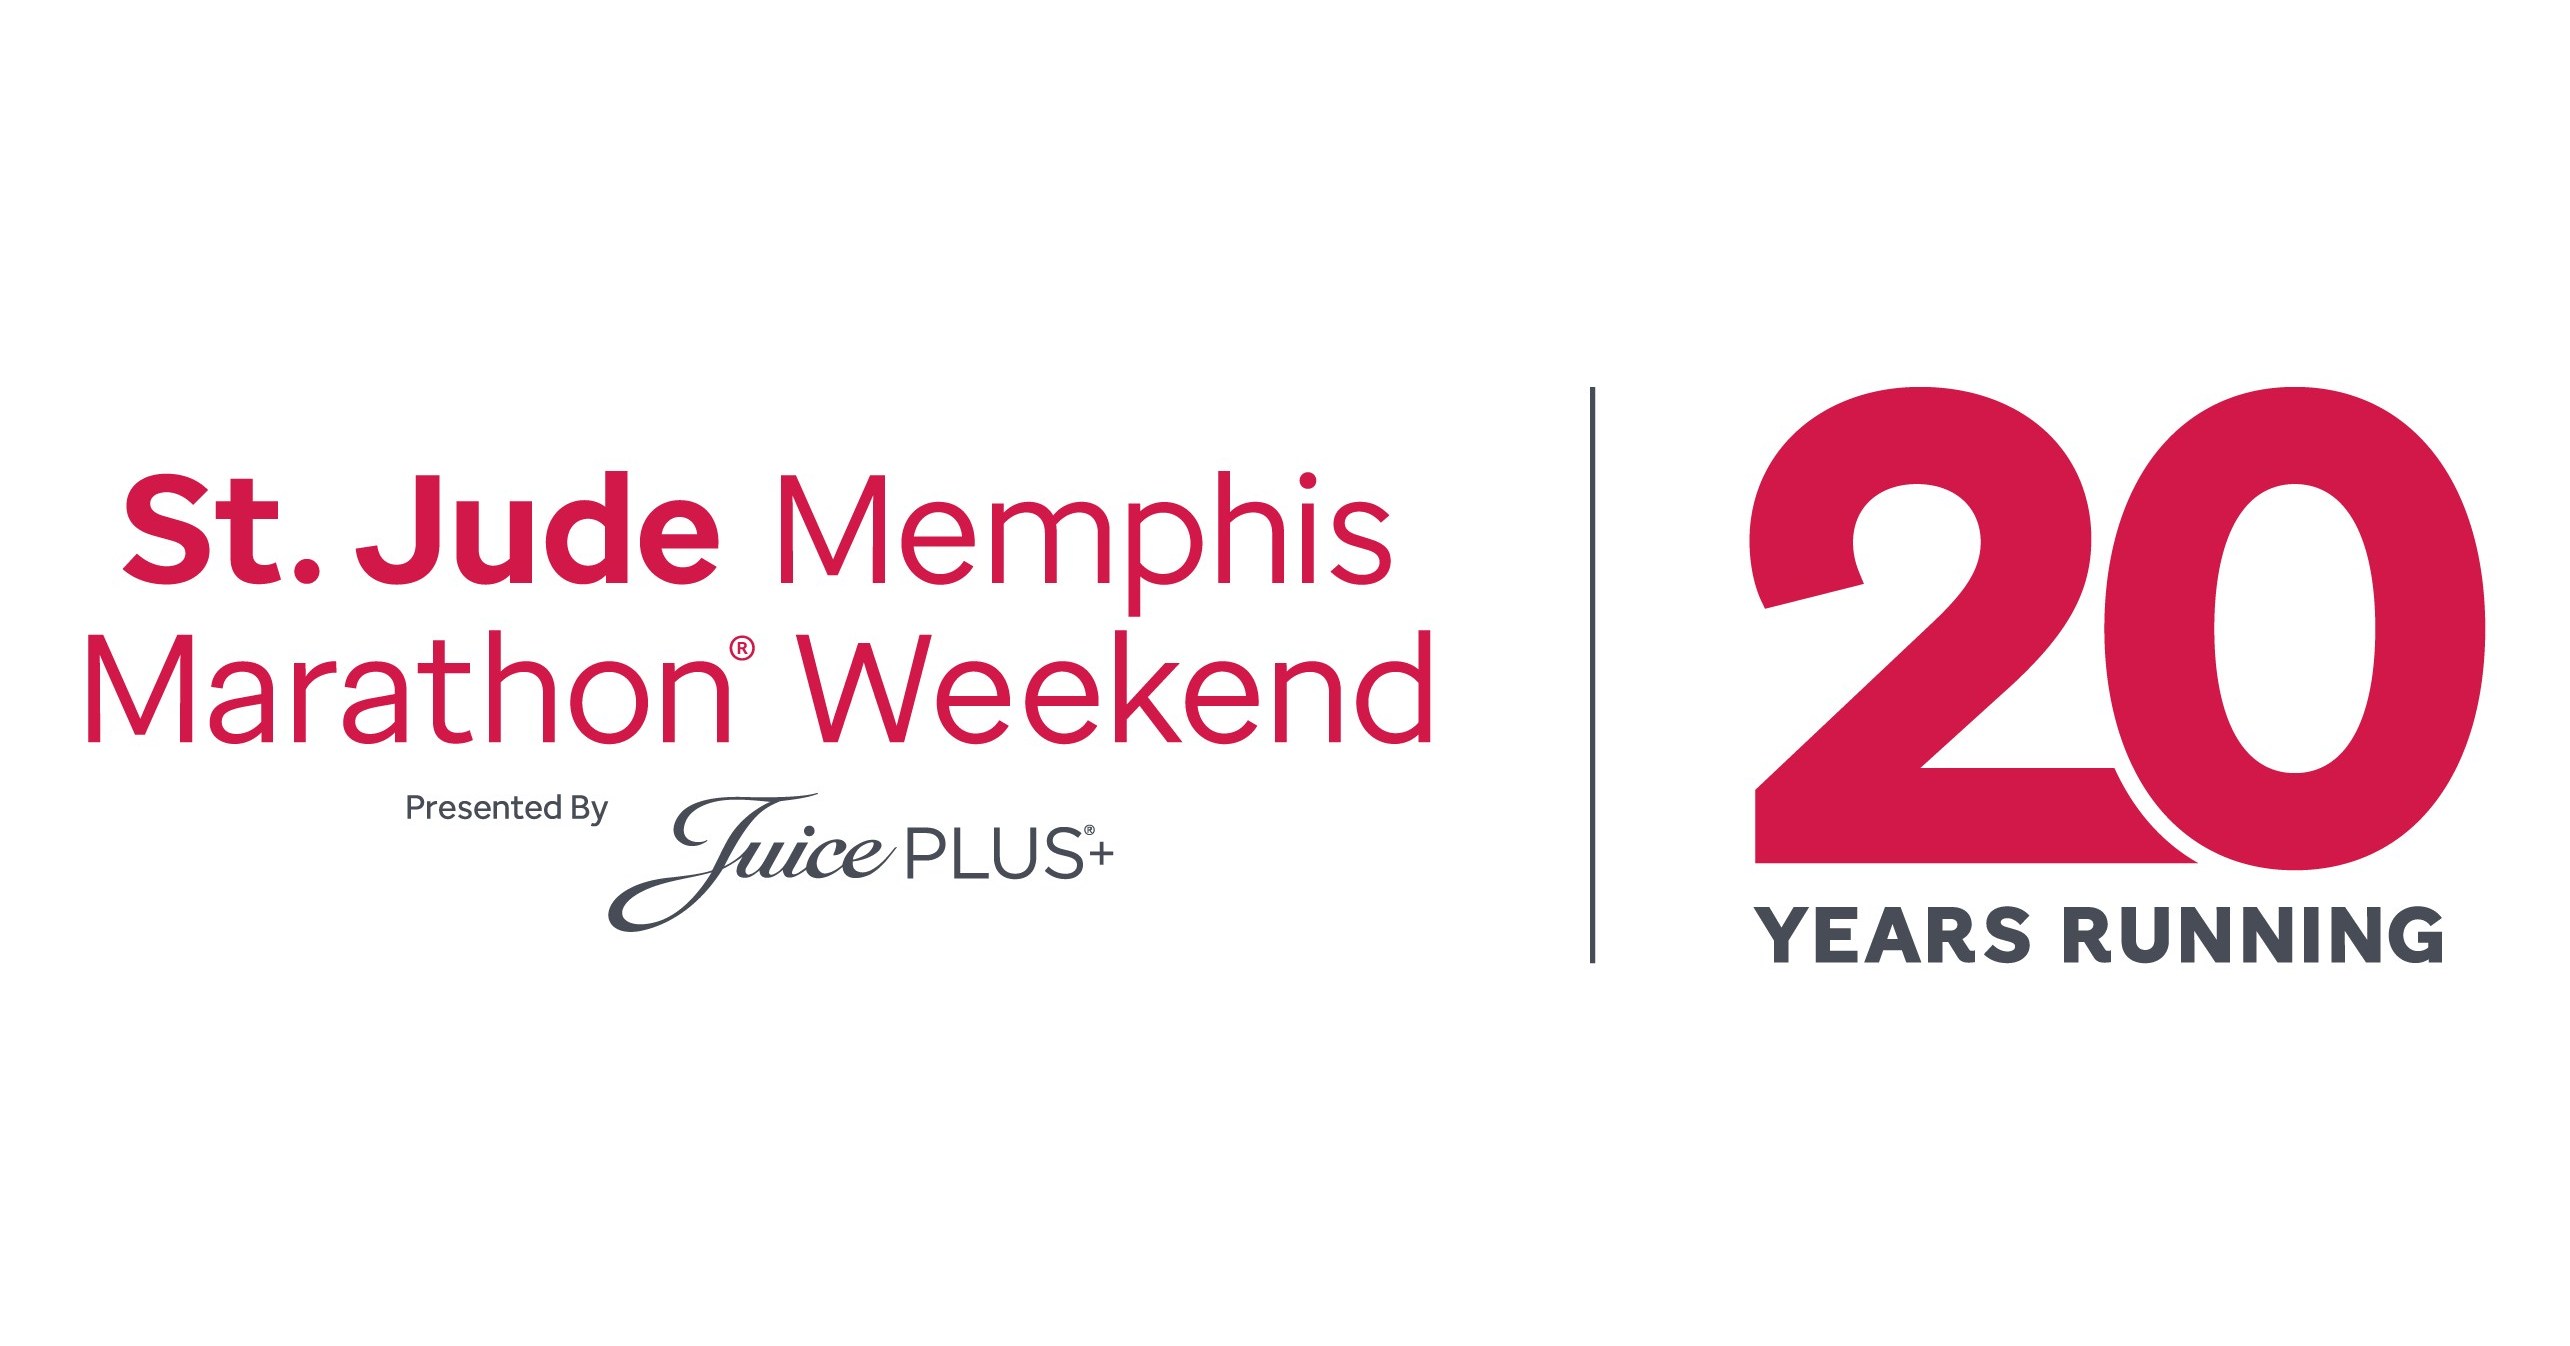 St. Jude Memphis Marathon Weekend celebrates 20 years running, nears